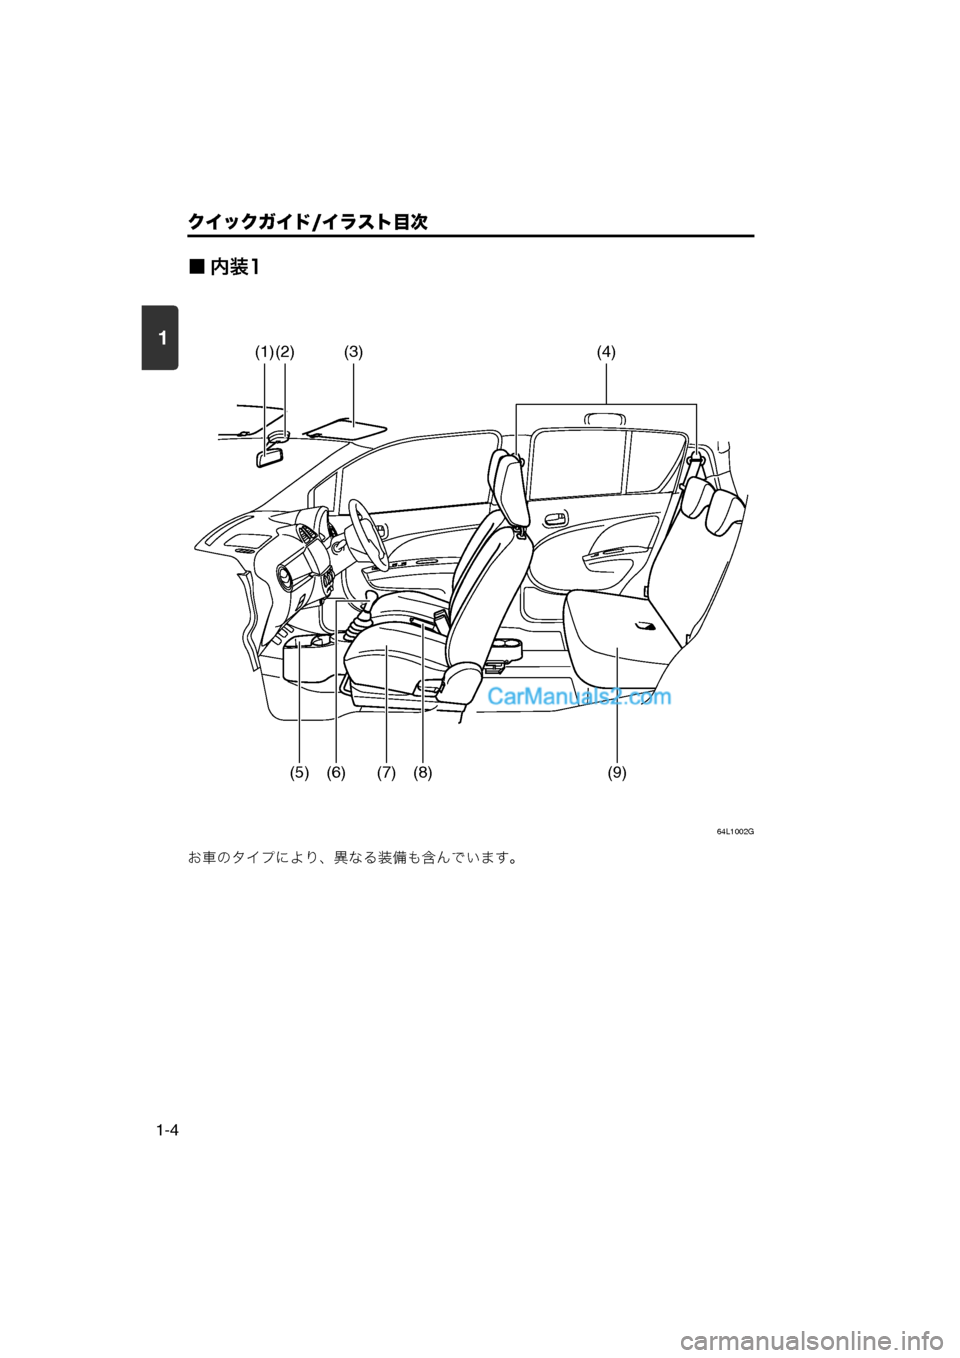 MAZDA MODEL CARROL 2013  取扱説明書 (キャロル) (in Japanese) 1
クイックガイド/イラスト目次
1-4
■ 内装1
64L1002G
お車のタイプにより、異なる装備も含んでいます。
(1)(2)(3)(4)
(5)(6)(7)(8)(9)
000- 取扱説明書 .book  4 ペ